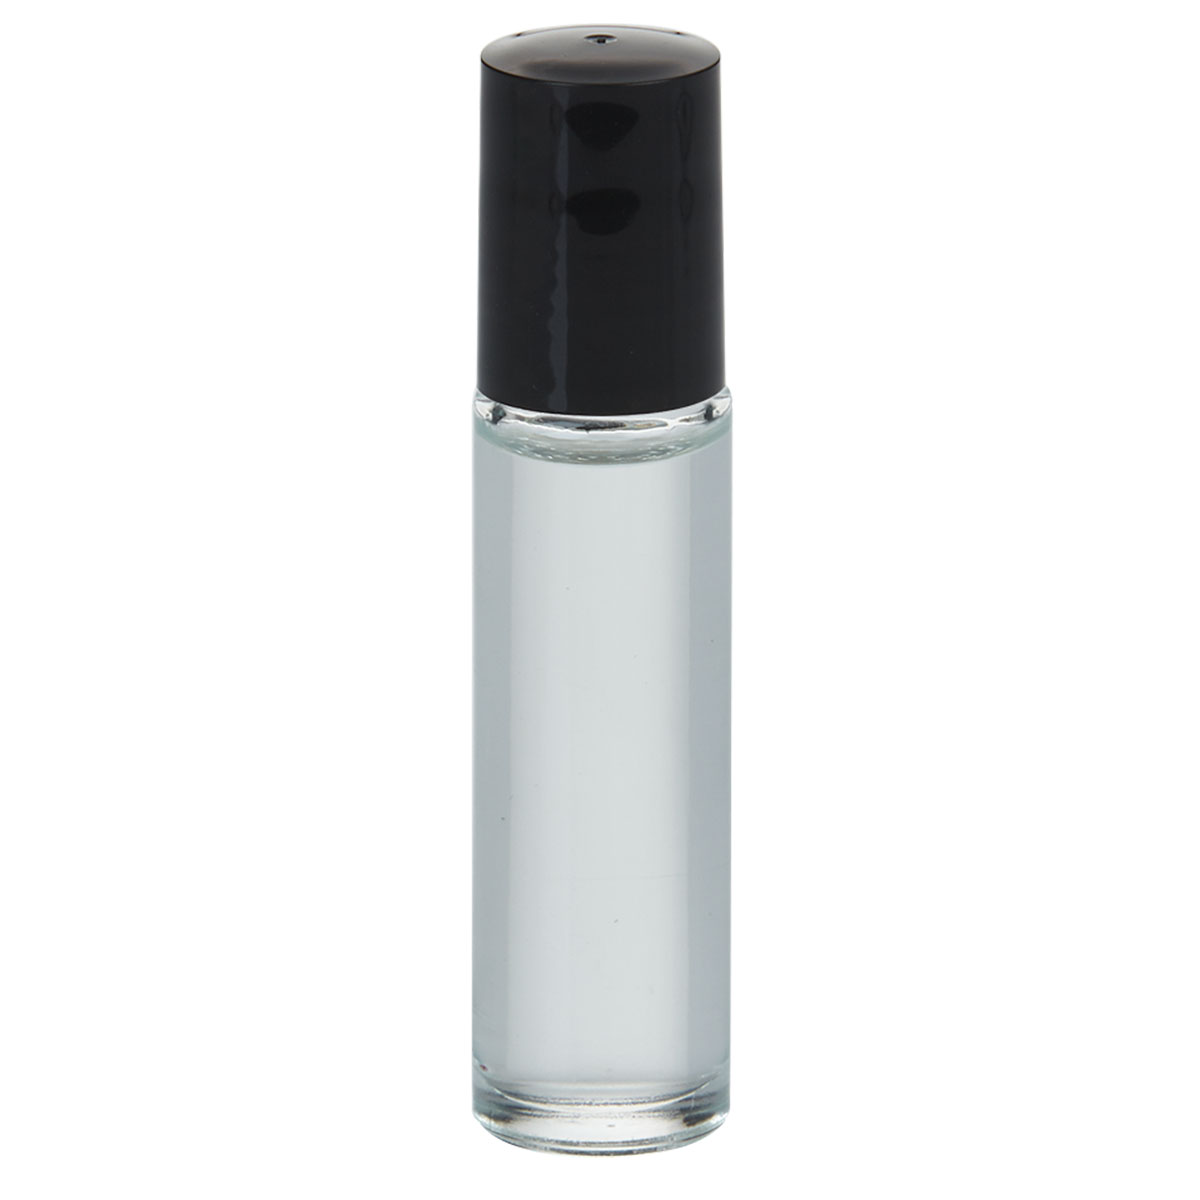 Exhale - Eucalyptus/Peppermint Essential Oil 10ml Roller Bottle